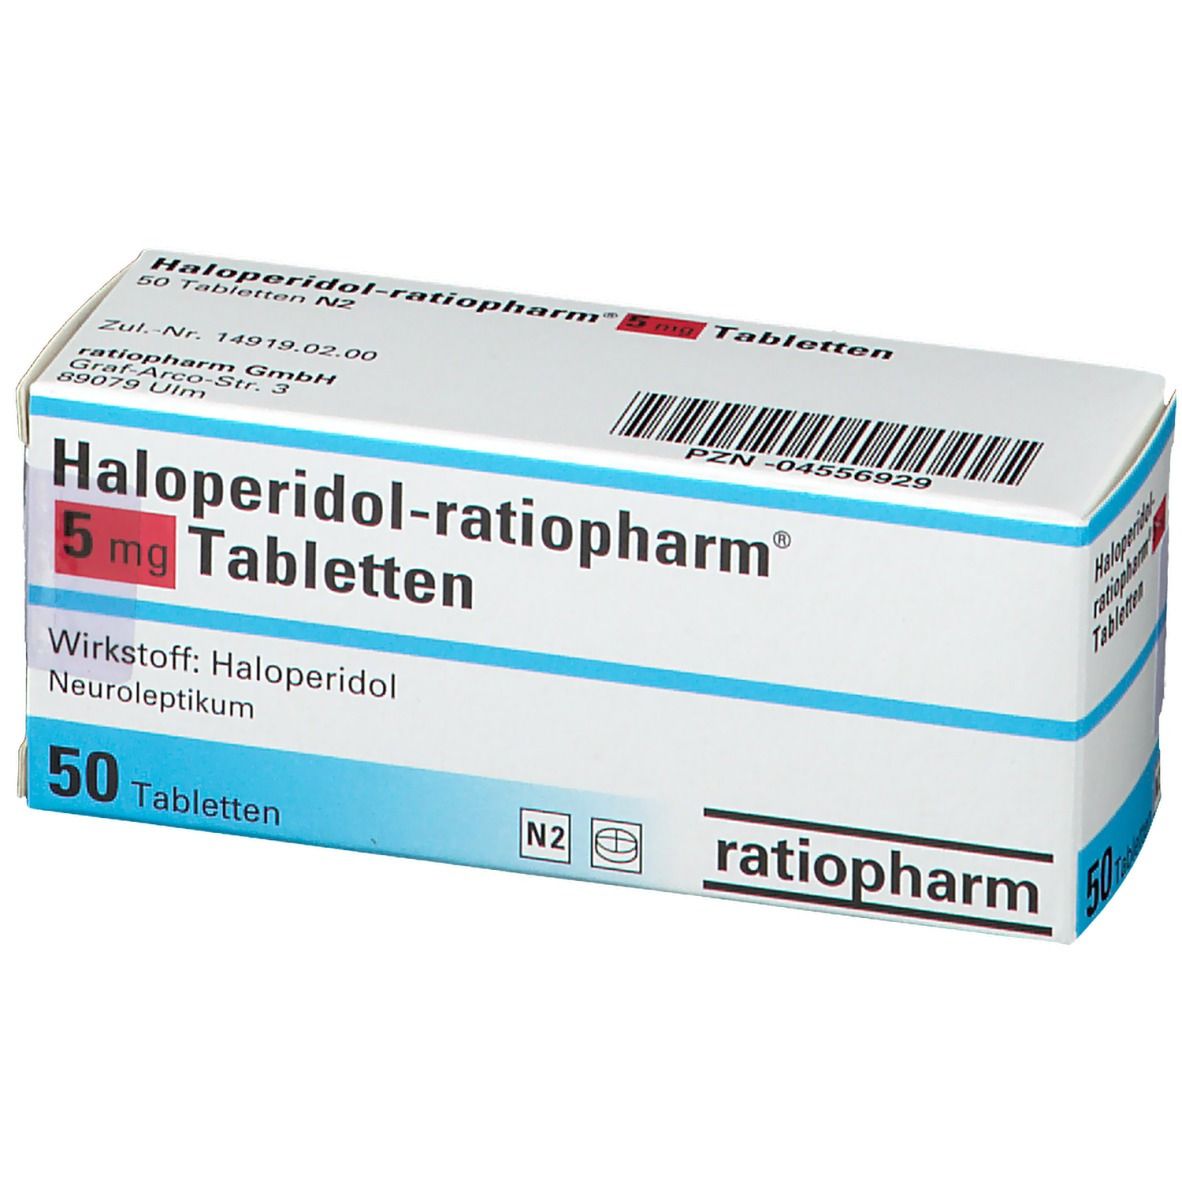 Haloperidol-ratiopharm® 5 mg